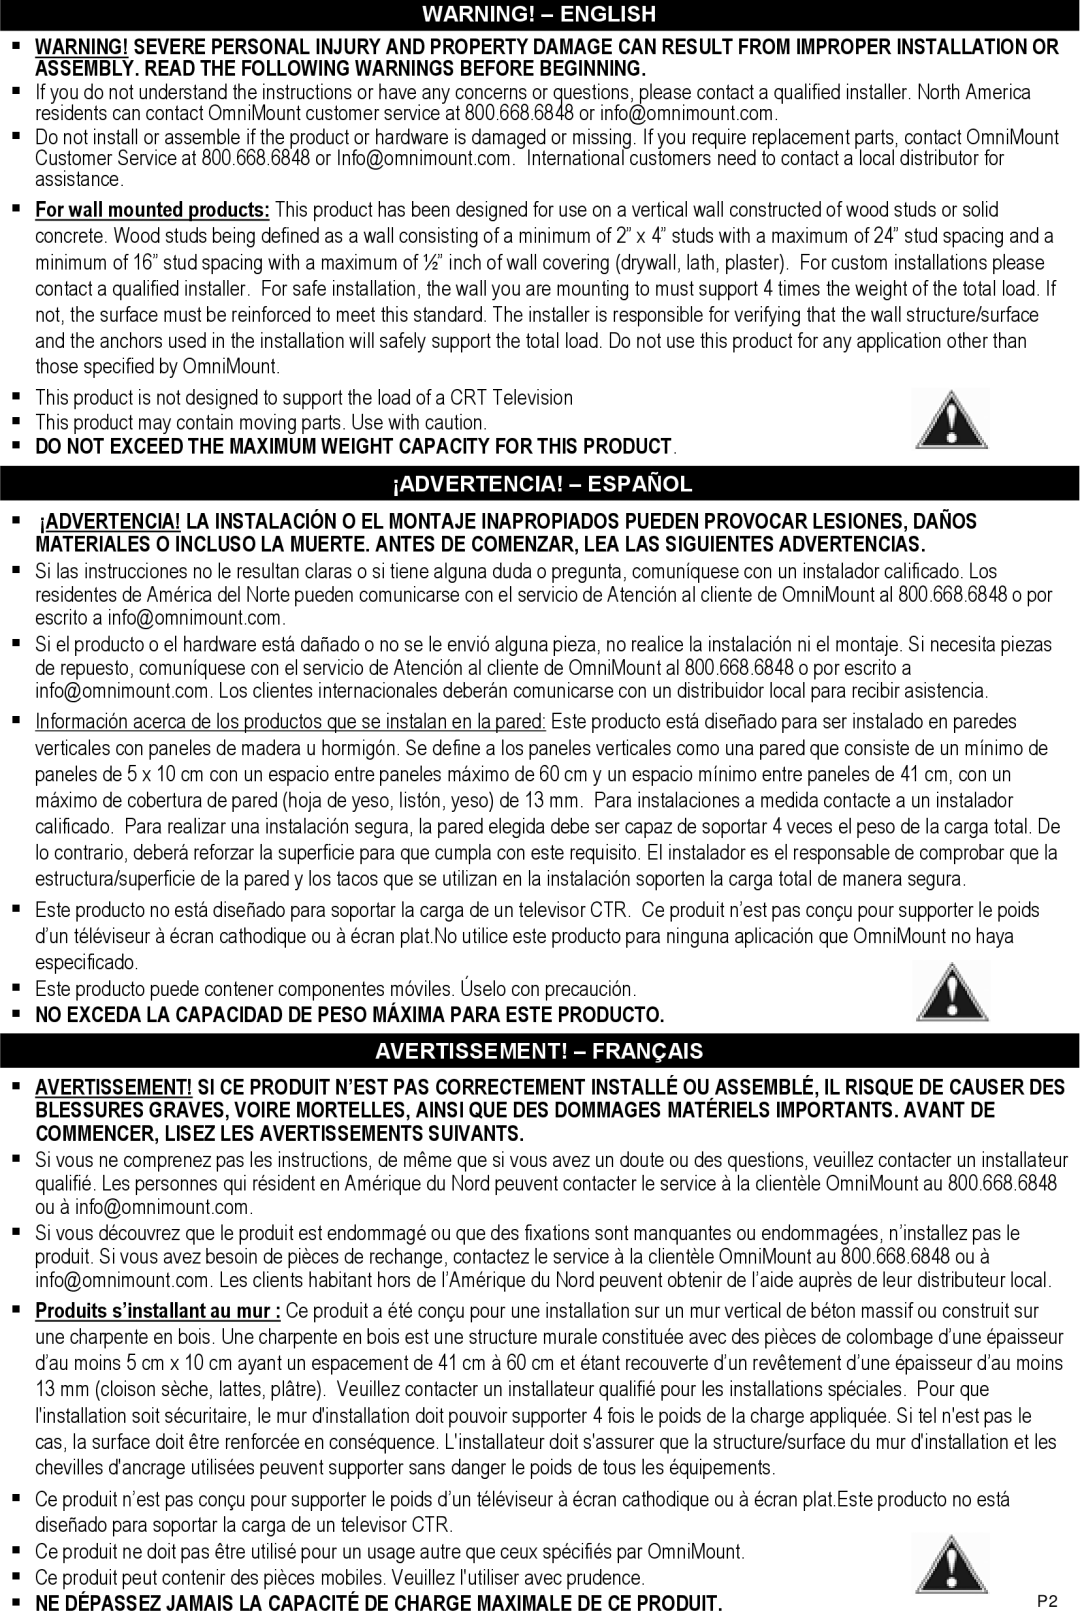 Omnimount RSW, 10135 instruction manual Warning! - English, ¡Advertencia! - Español, Avertissement! - Français 